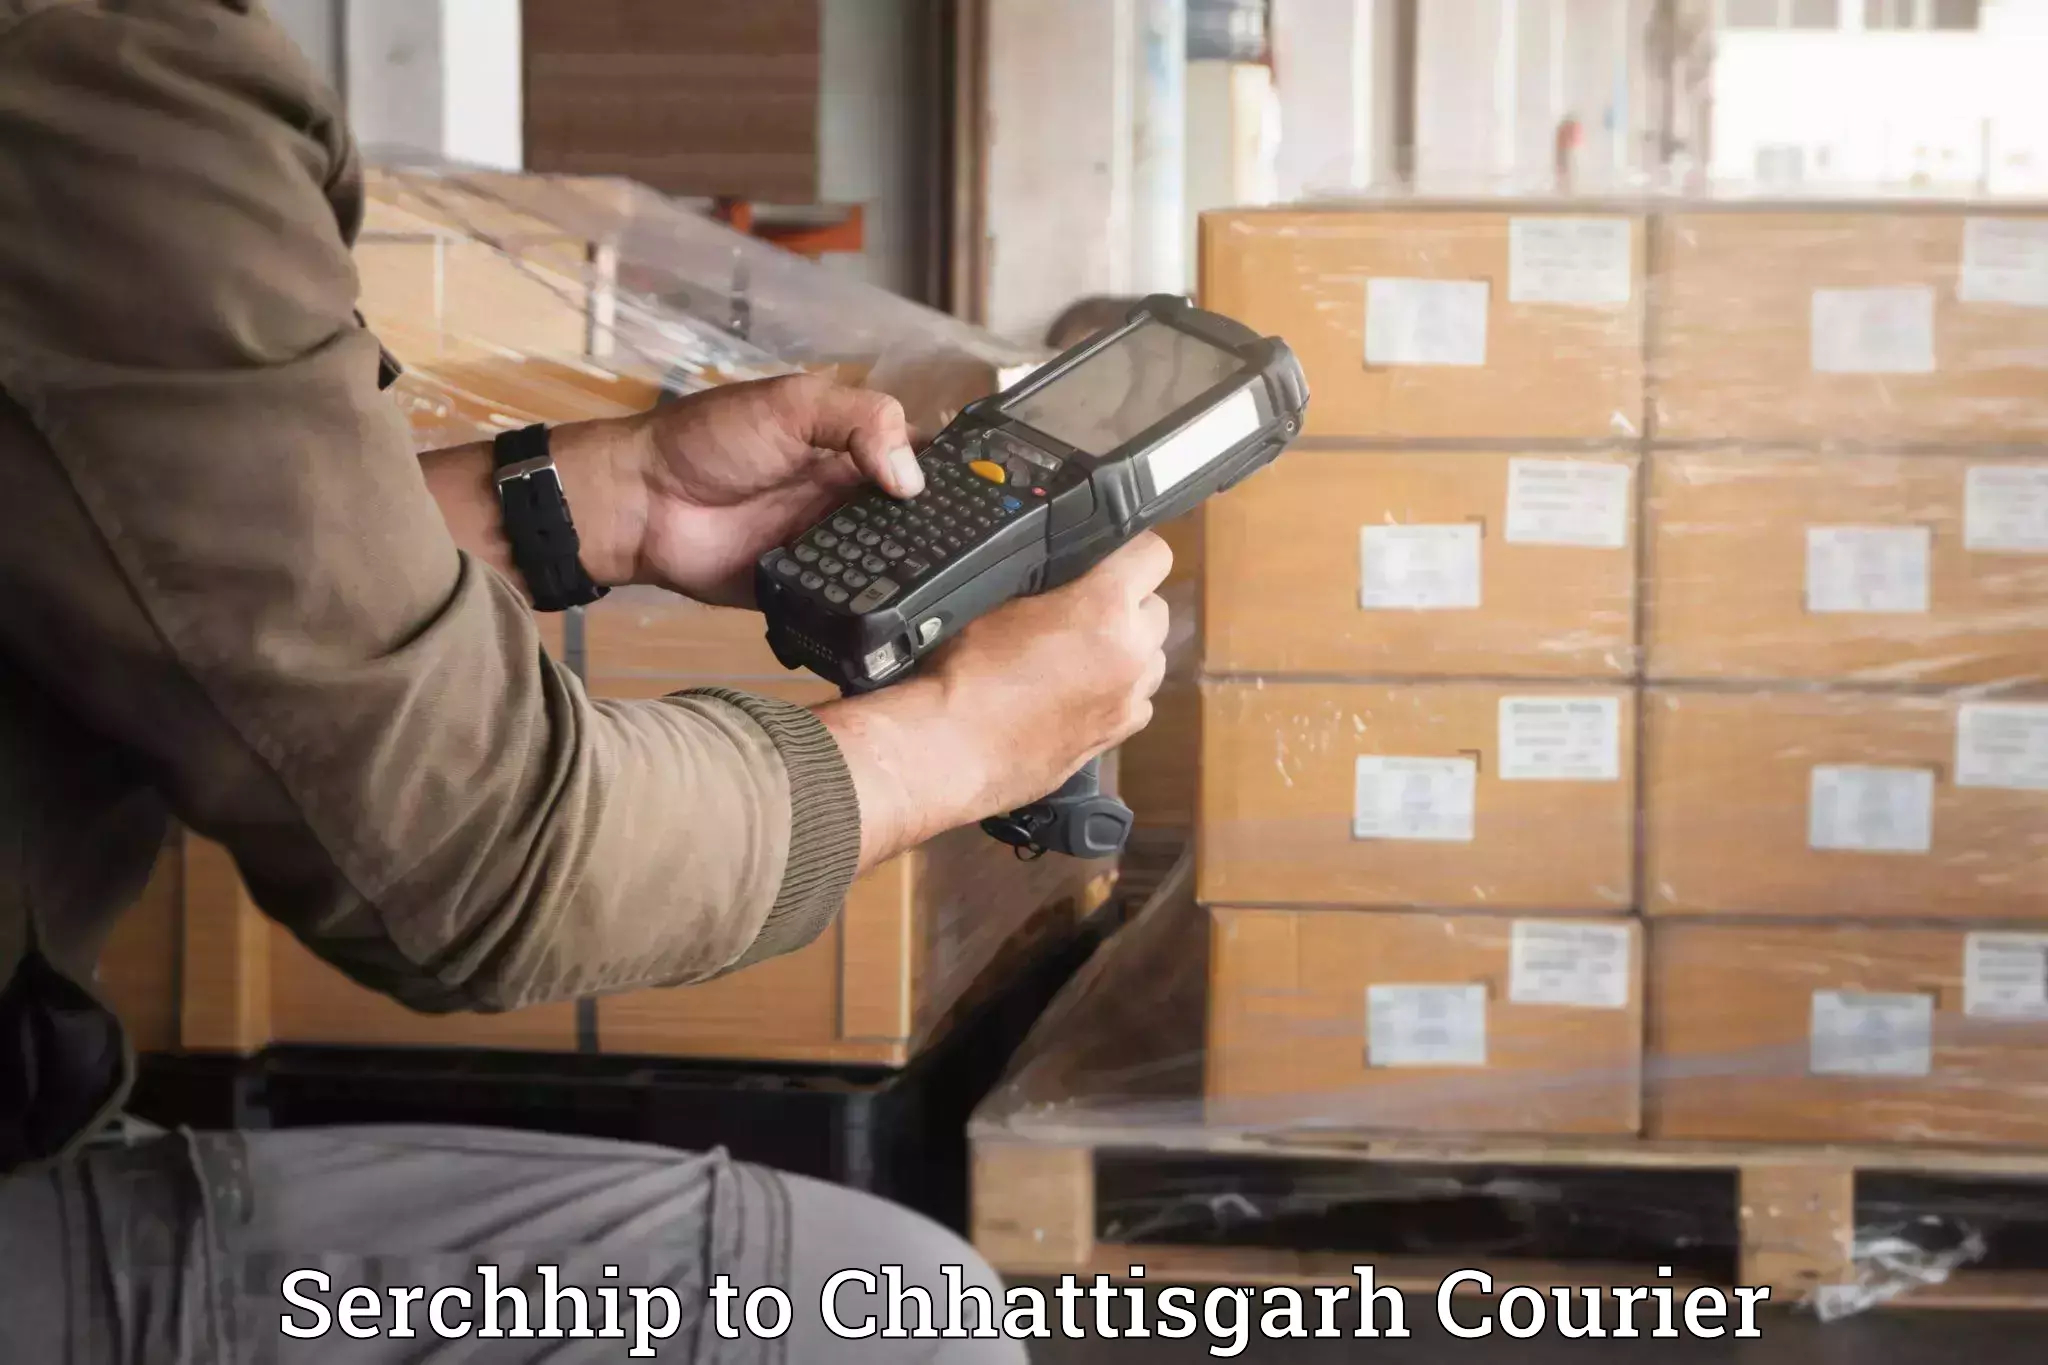 Specialized moving company Serchhip to Chhattisgarh